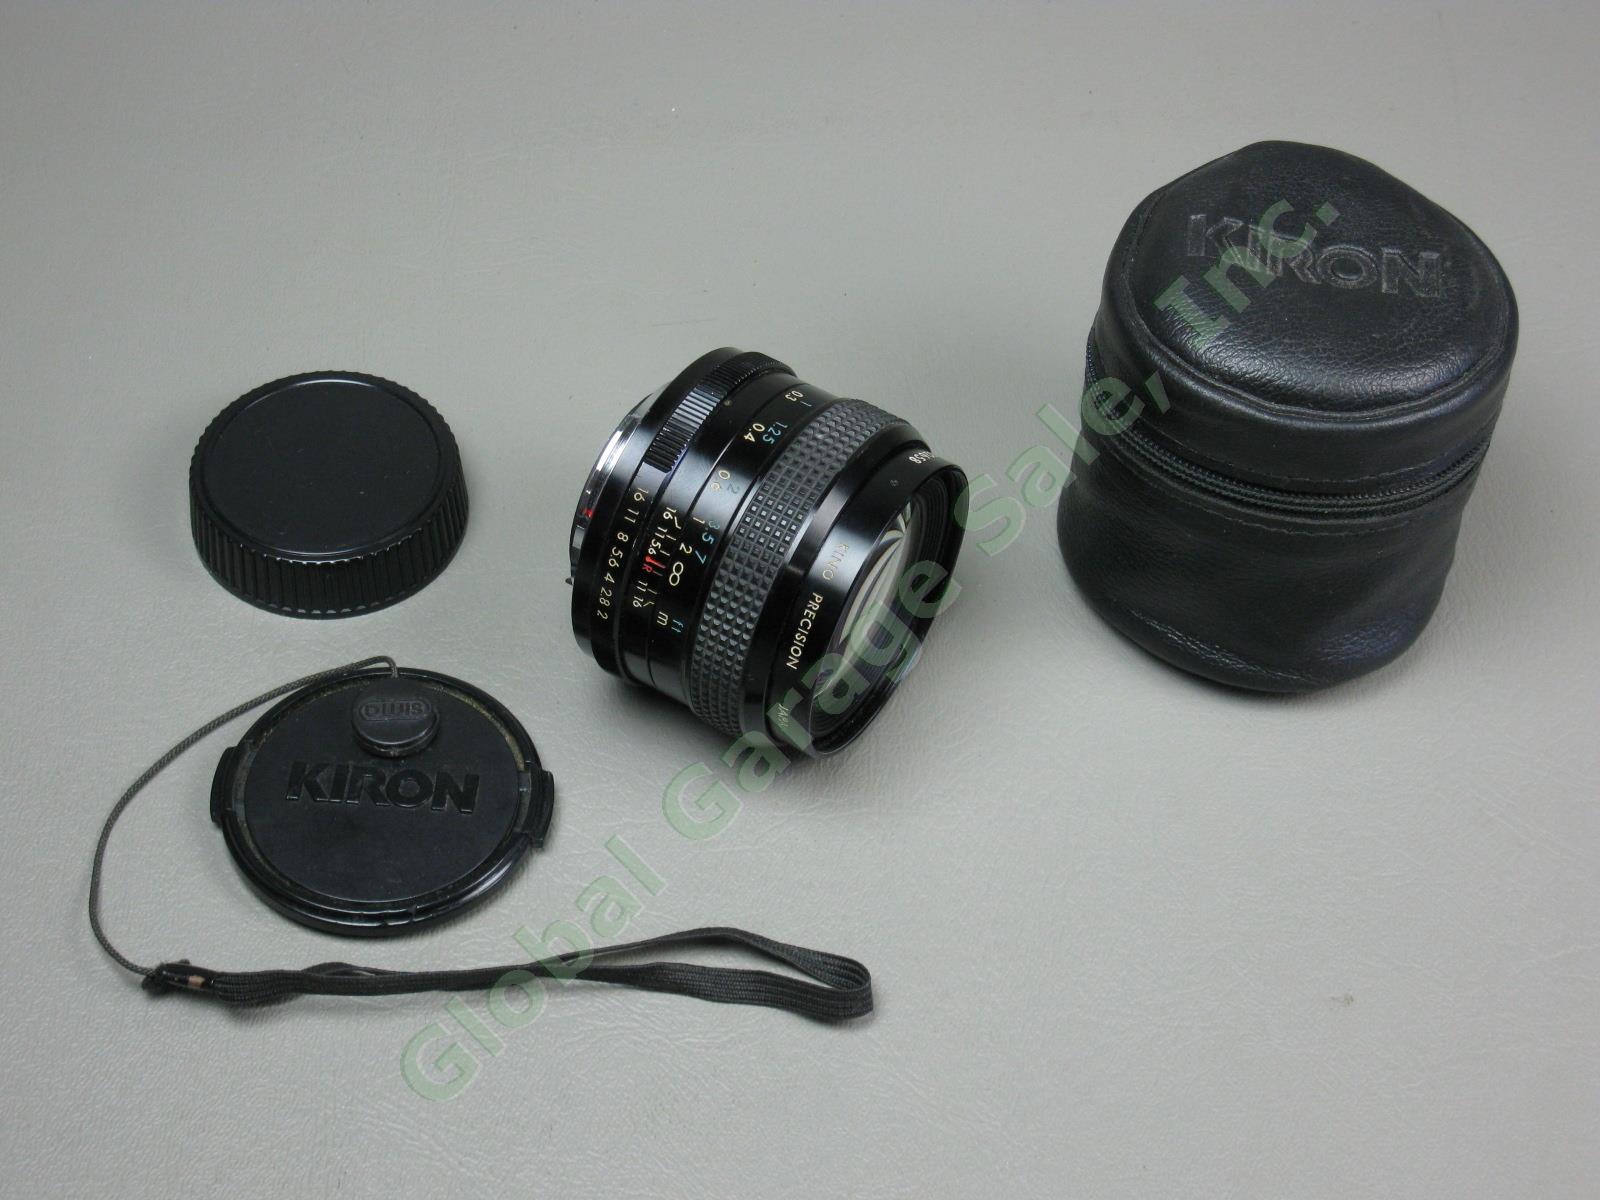 Kiron 24mm f/2 Wide Angle Camera Lens Kino Precision MC Pentax K Mount? NO RES!